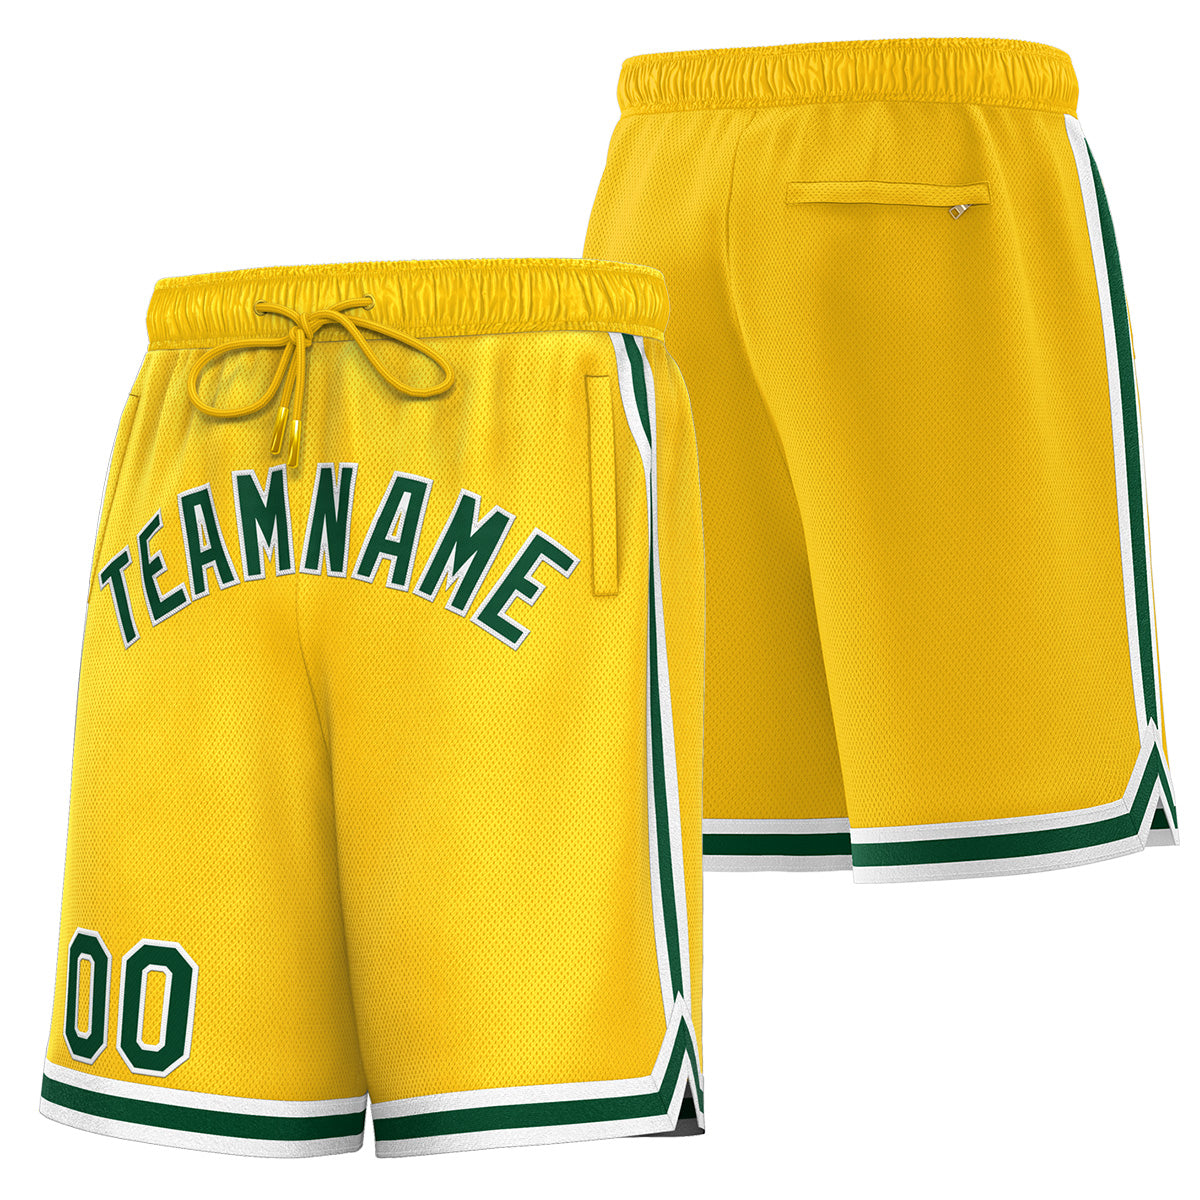 kxk custom yellow basketball shorts